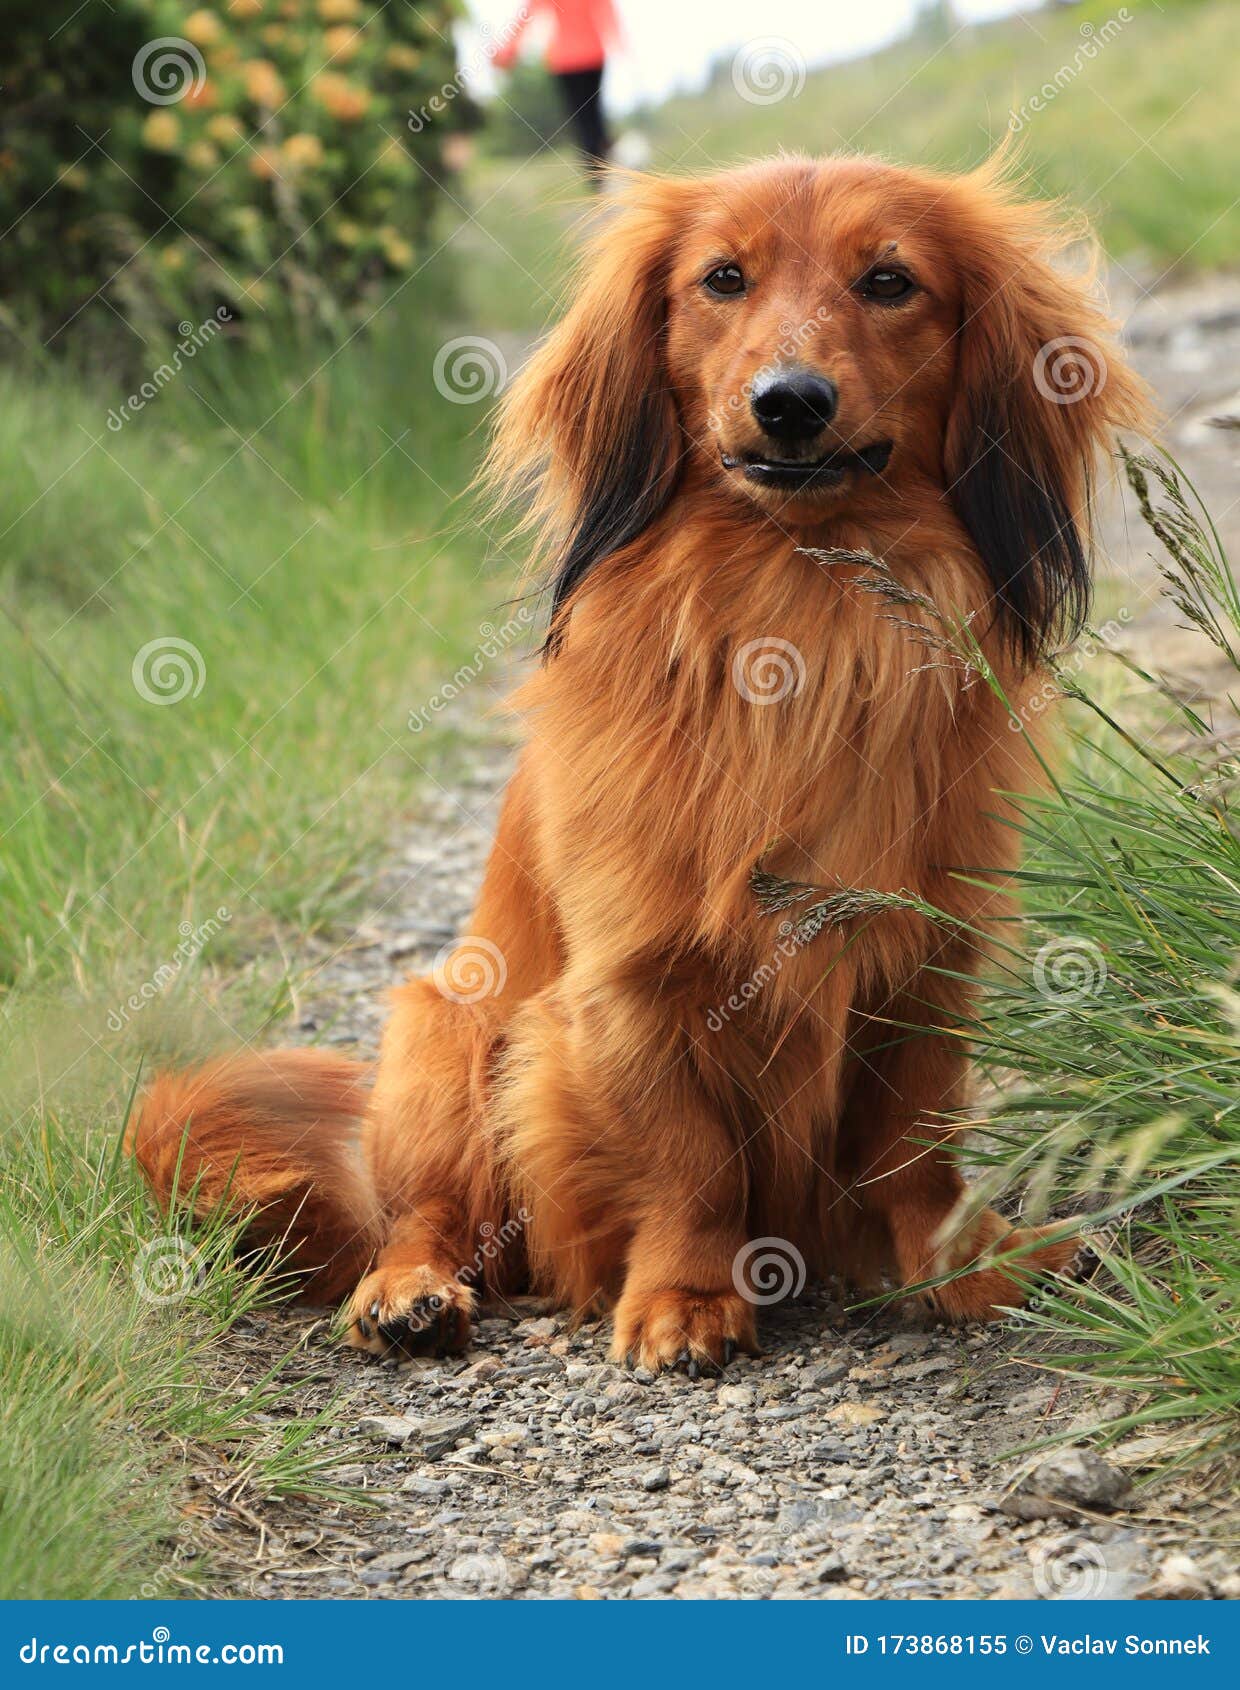 long haired sausage dog